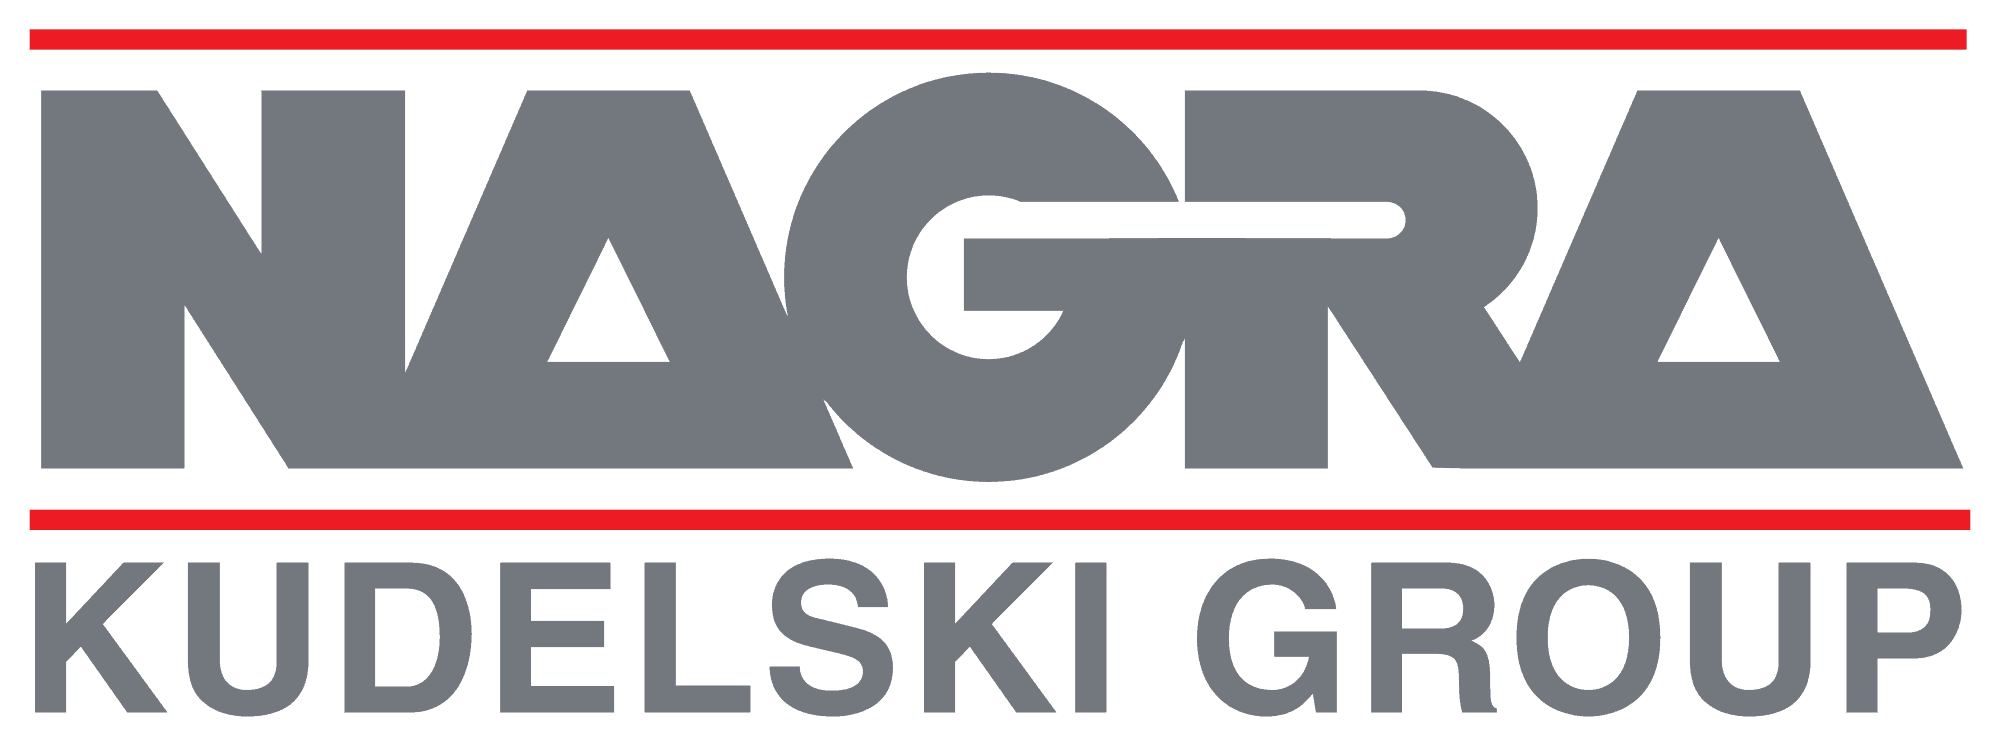 Logo_Nagra_Kudelski_Group.svg